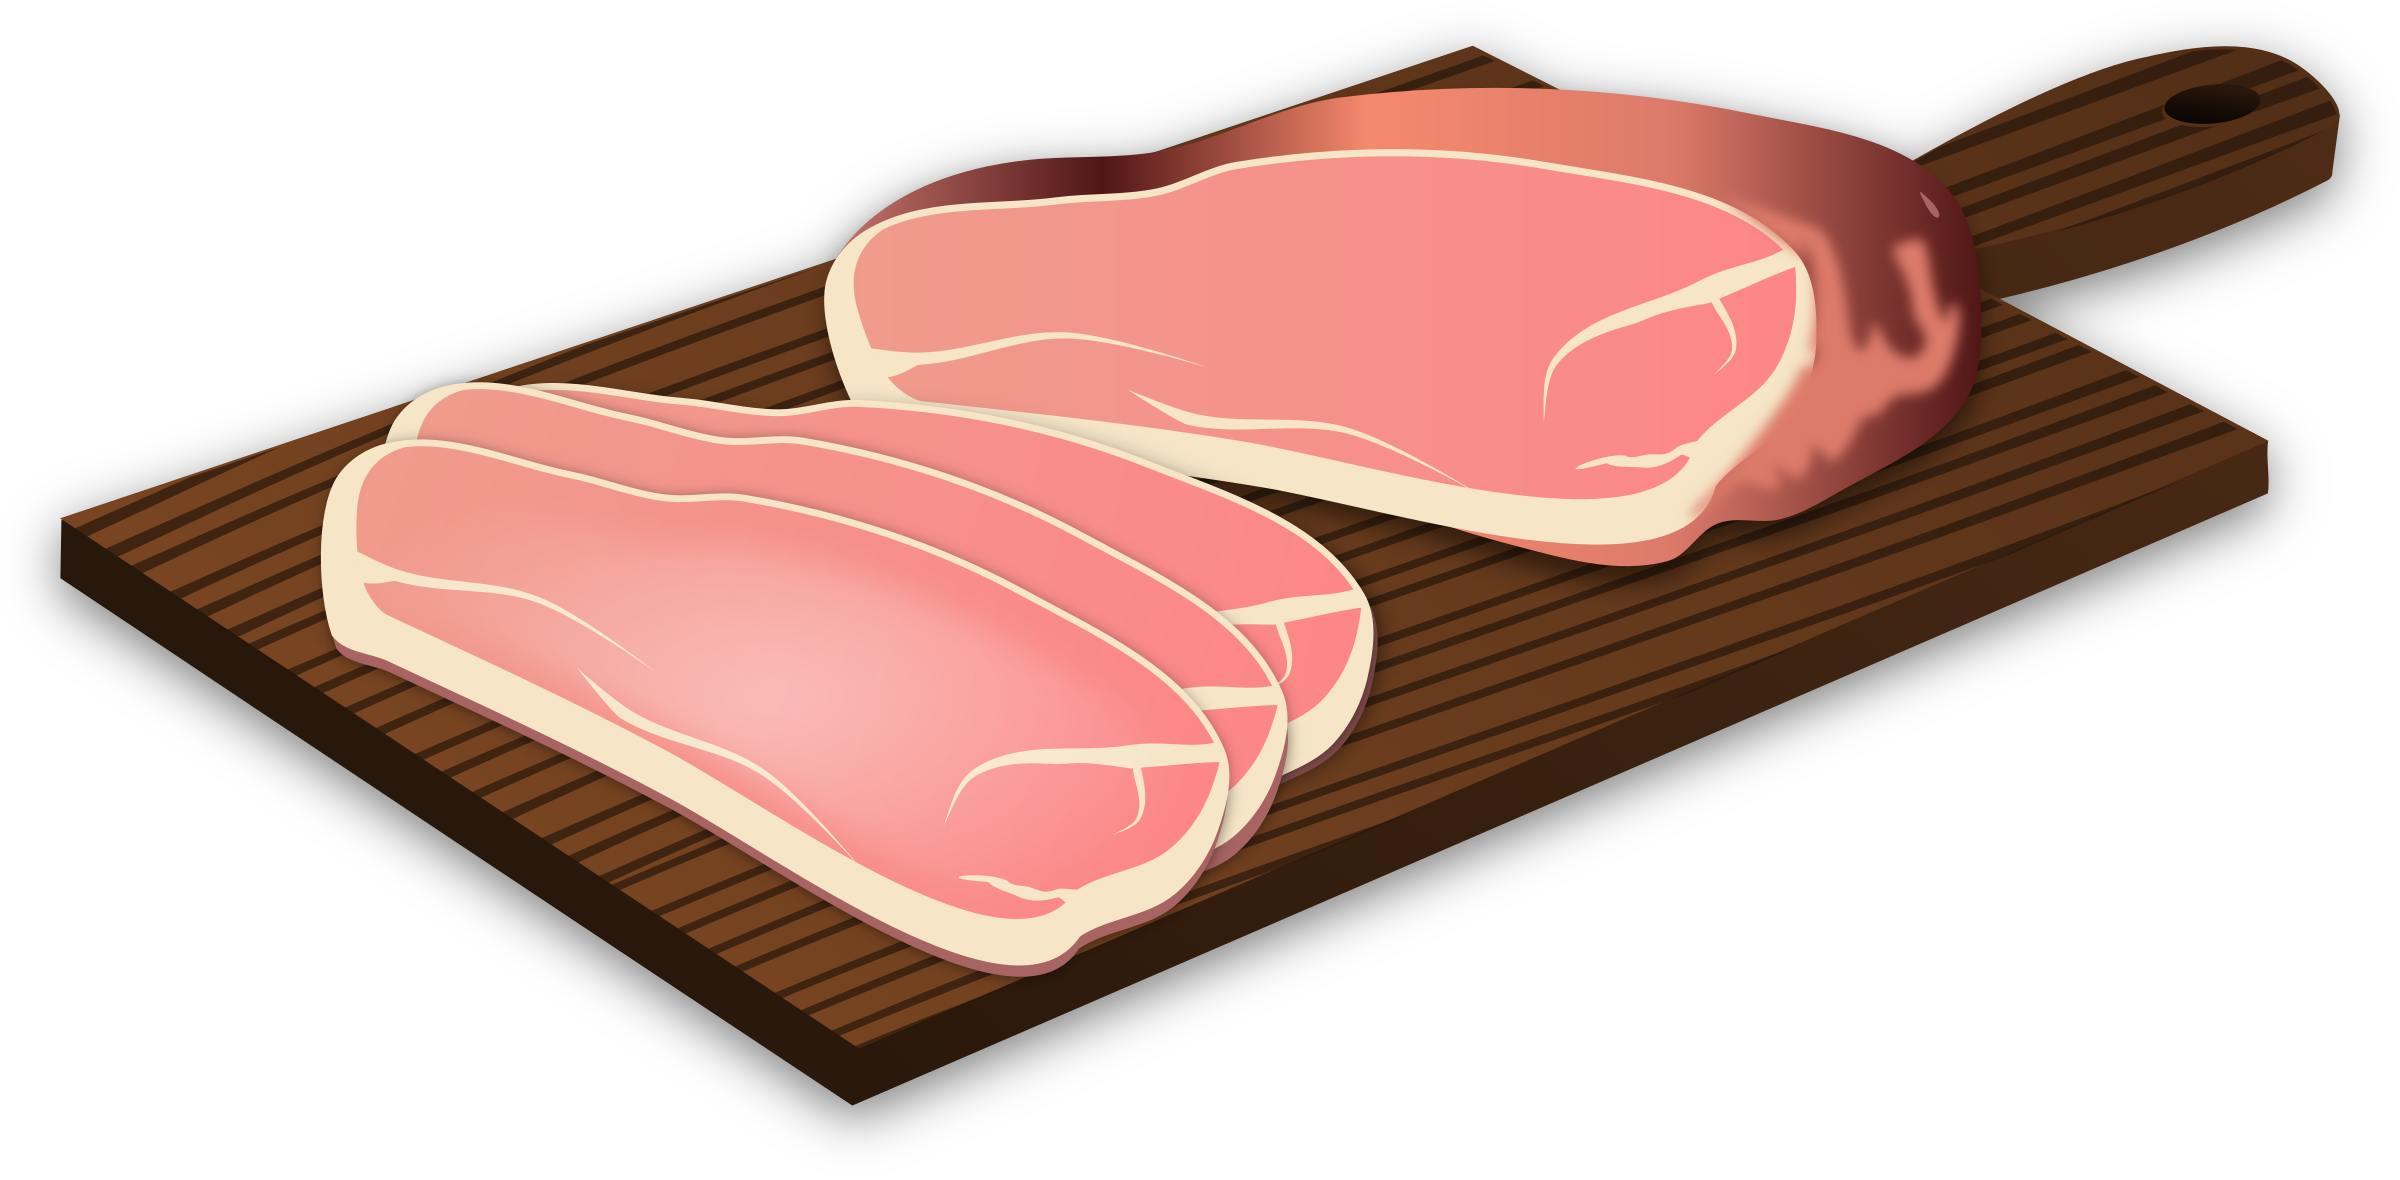 bacon-clipart-ham-picture-246451-bacon-clipart-ham